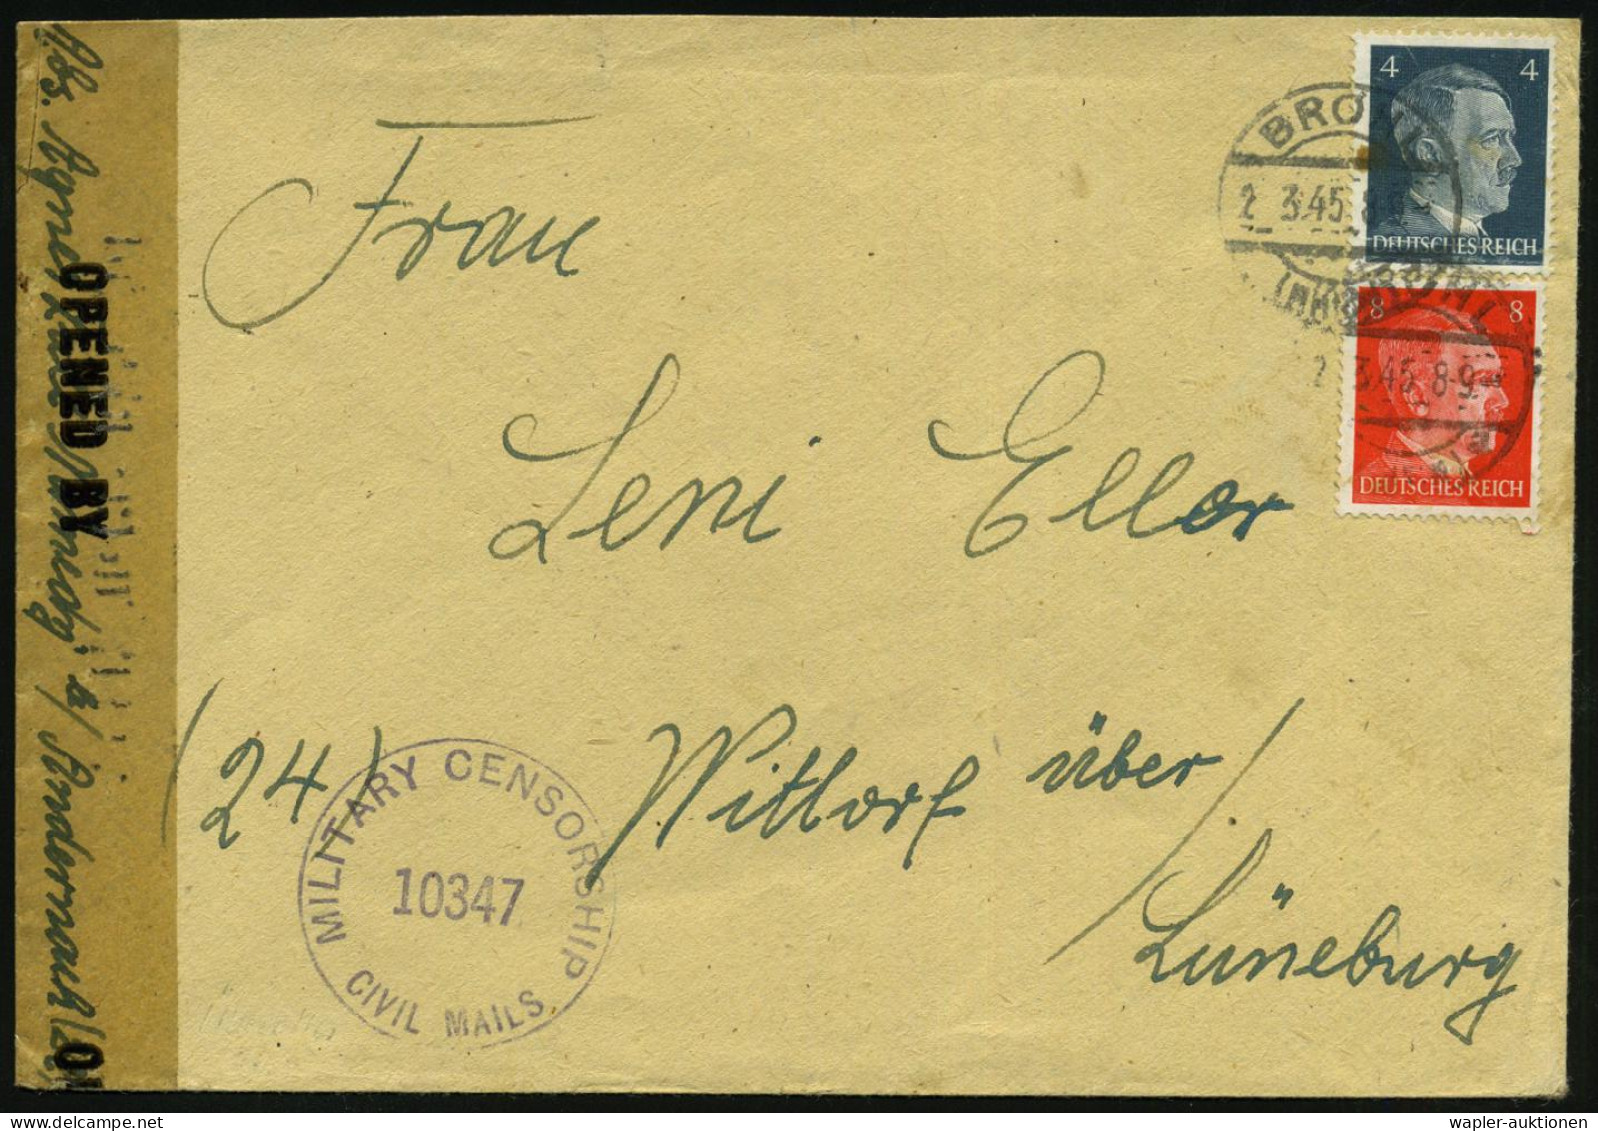 ÜBERROLLER / SPÄTE POST (Januar Bis 8.5.1945) - LATE MAIL (until May 8th, 1945) - POSTE TRES TARD (jusque à  8 Mai 1945  - Guerre Mondiale (Seconde)